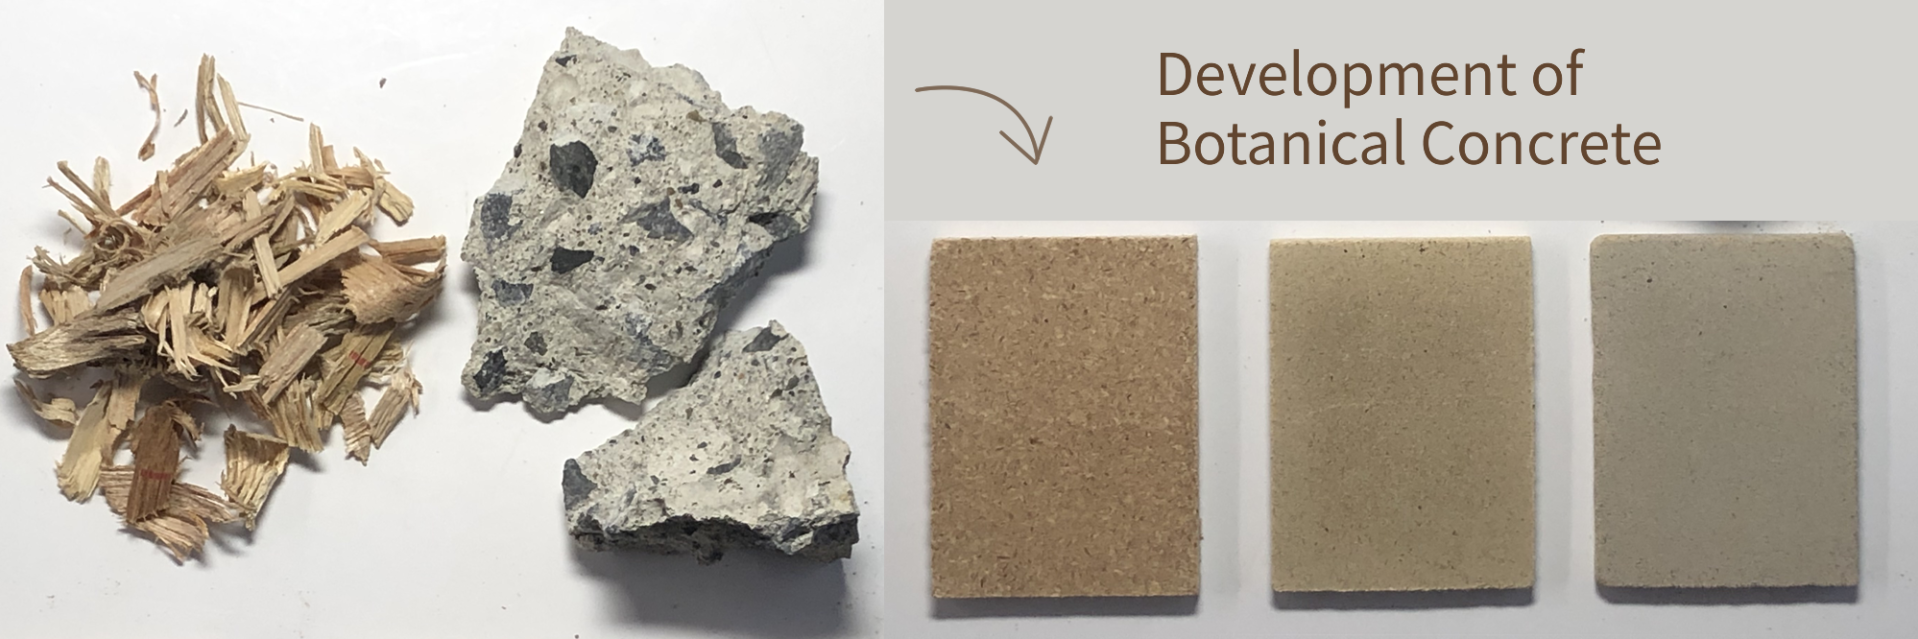 Development of Botanical Concrete